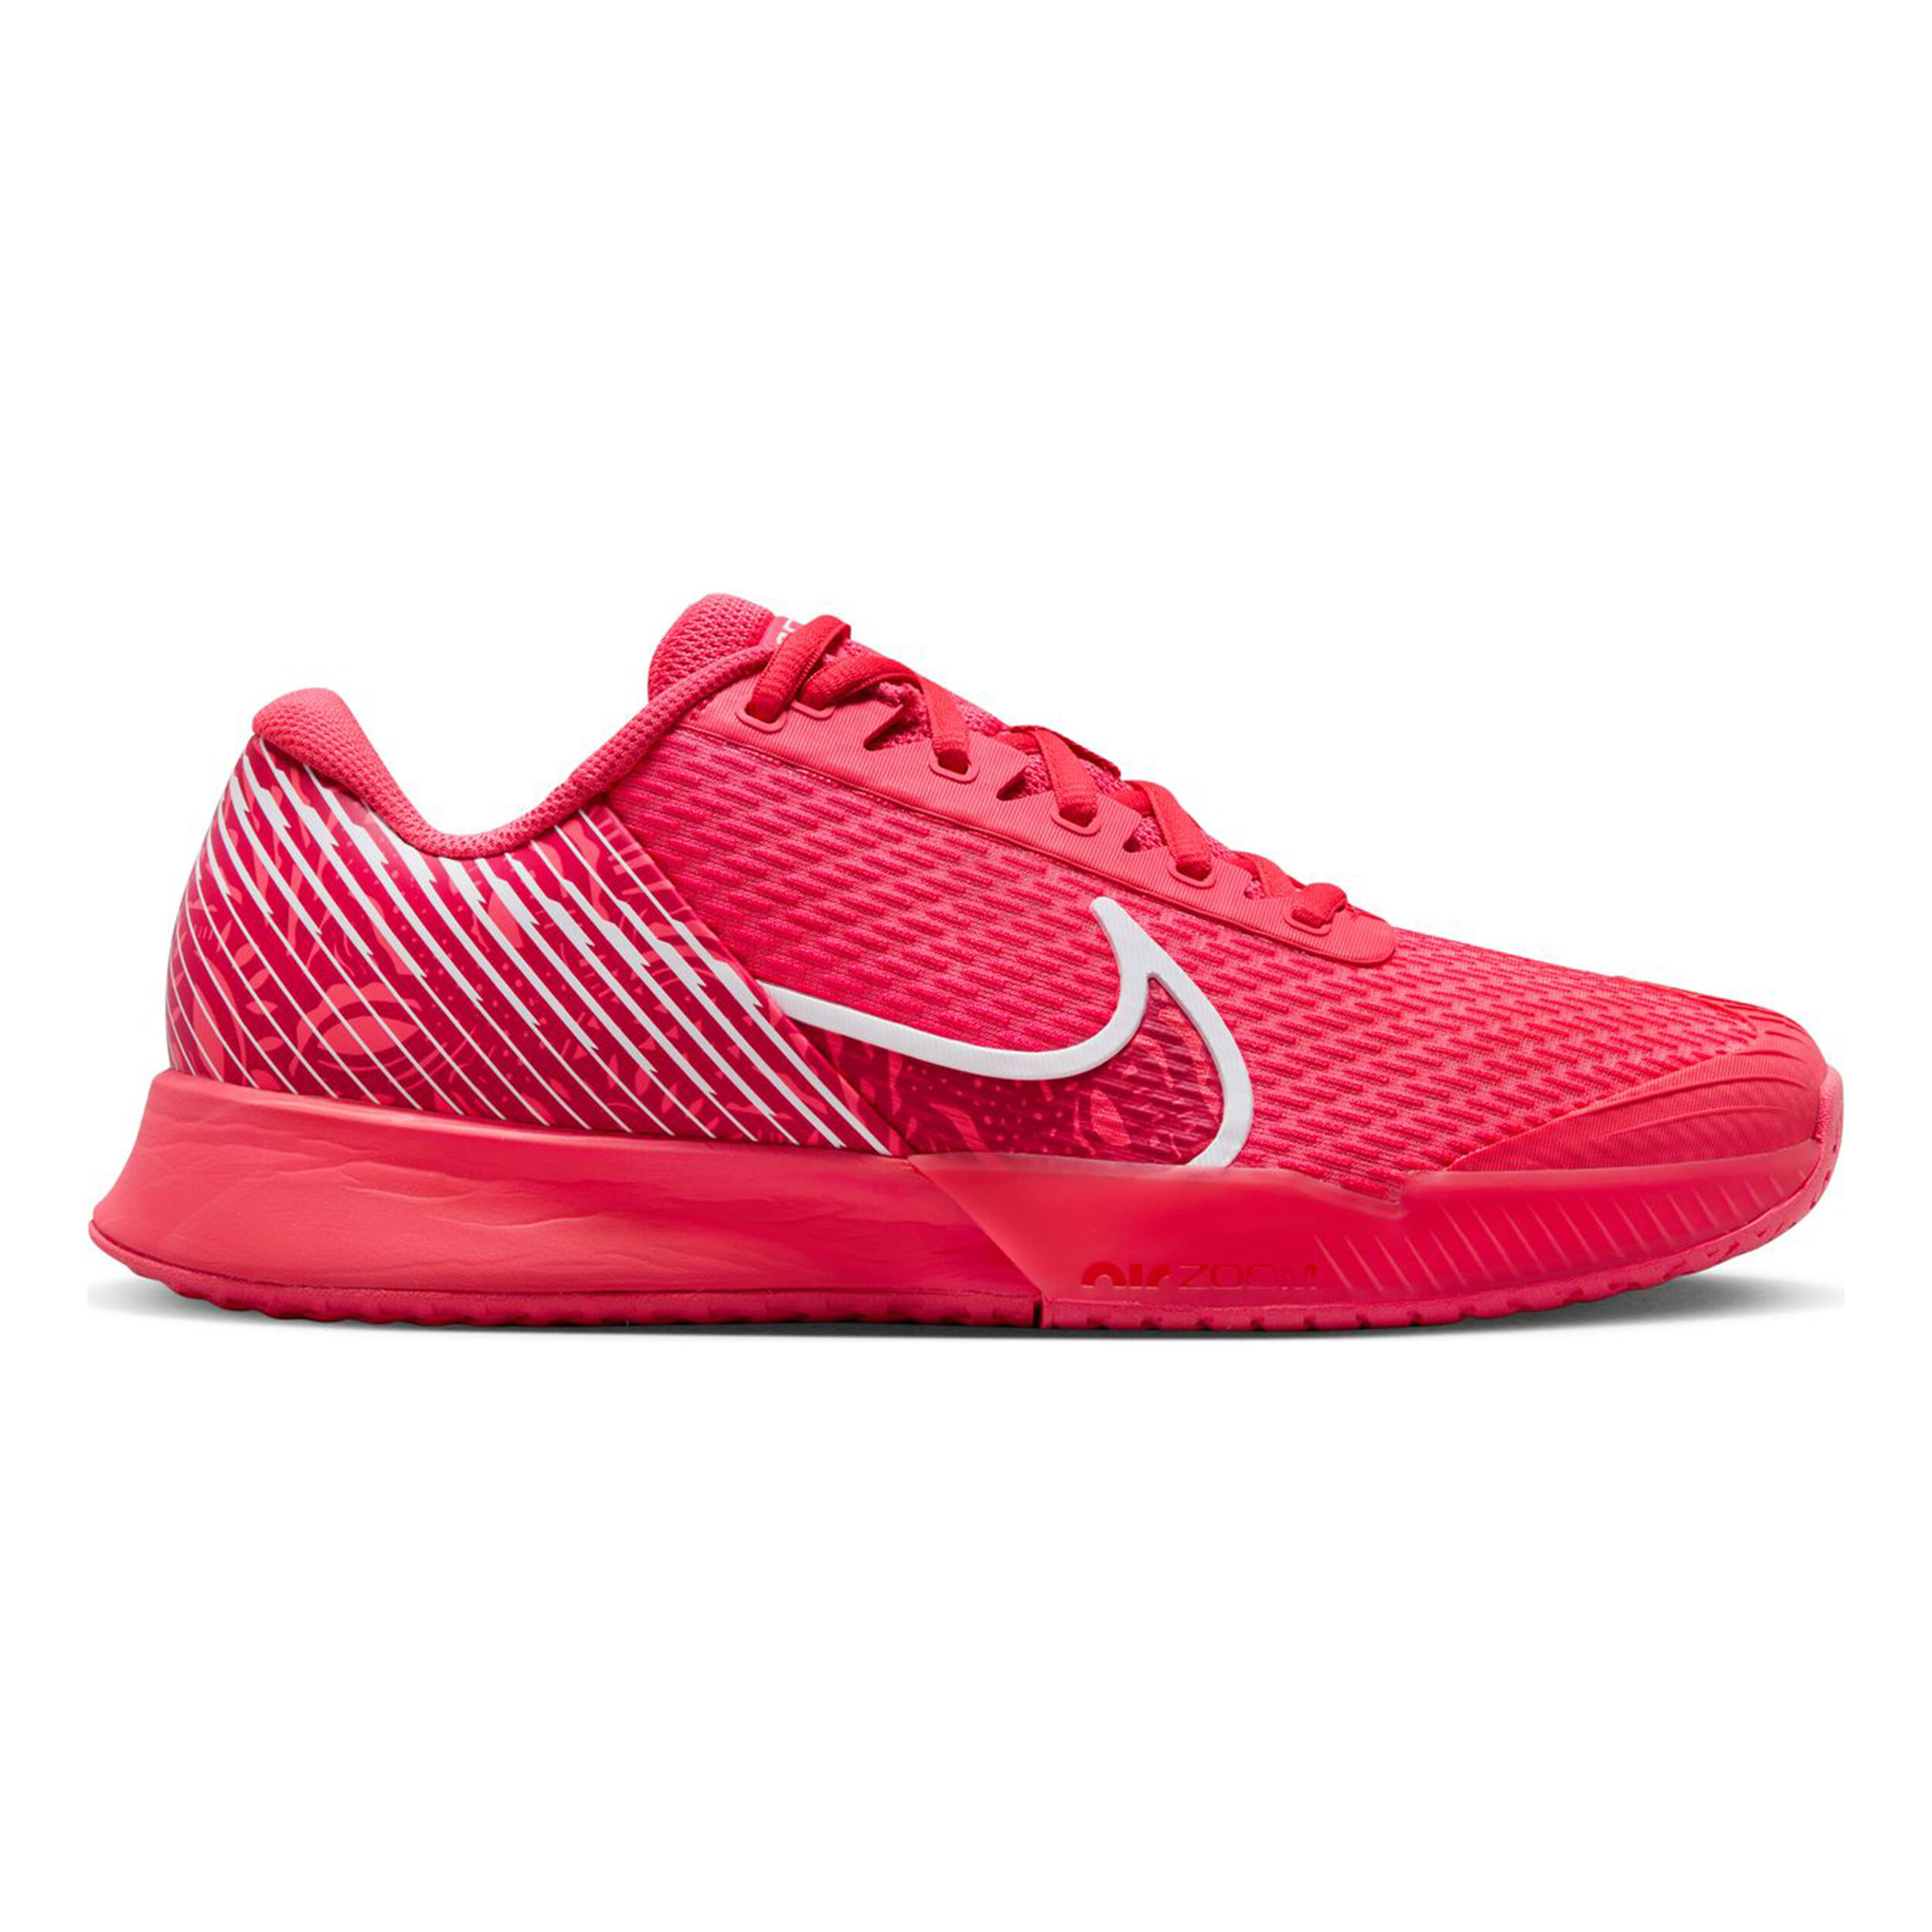 Buy Nike Court Vapor Pro 2 All Court Shoe Men Neon Pink